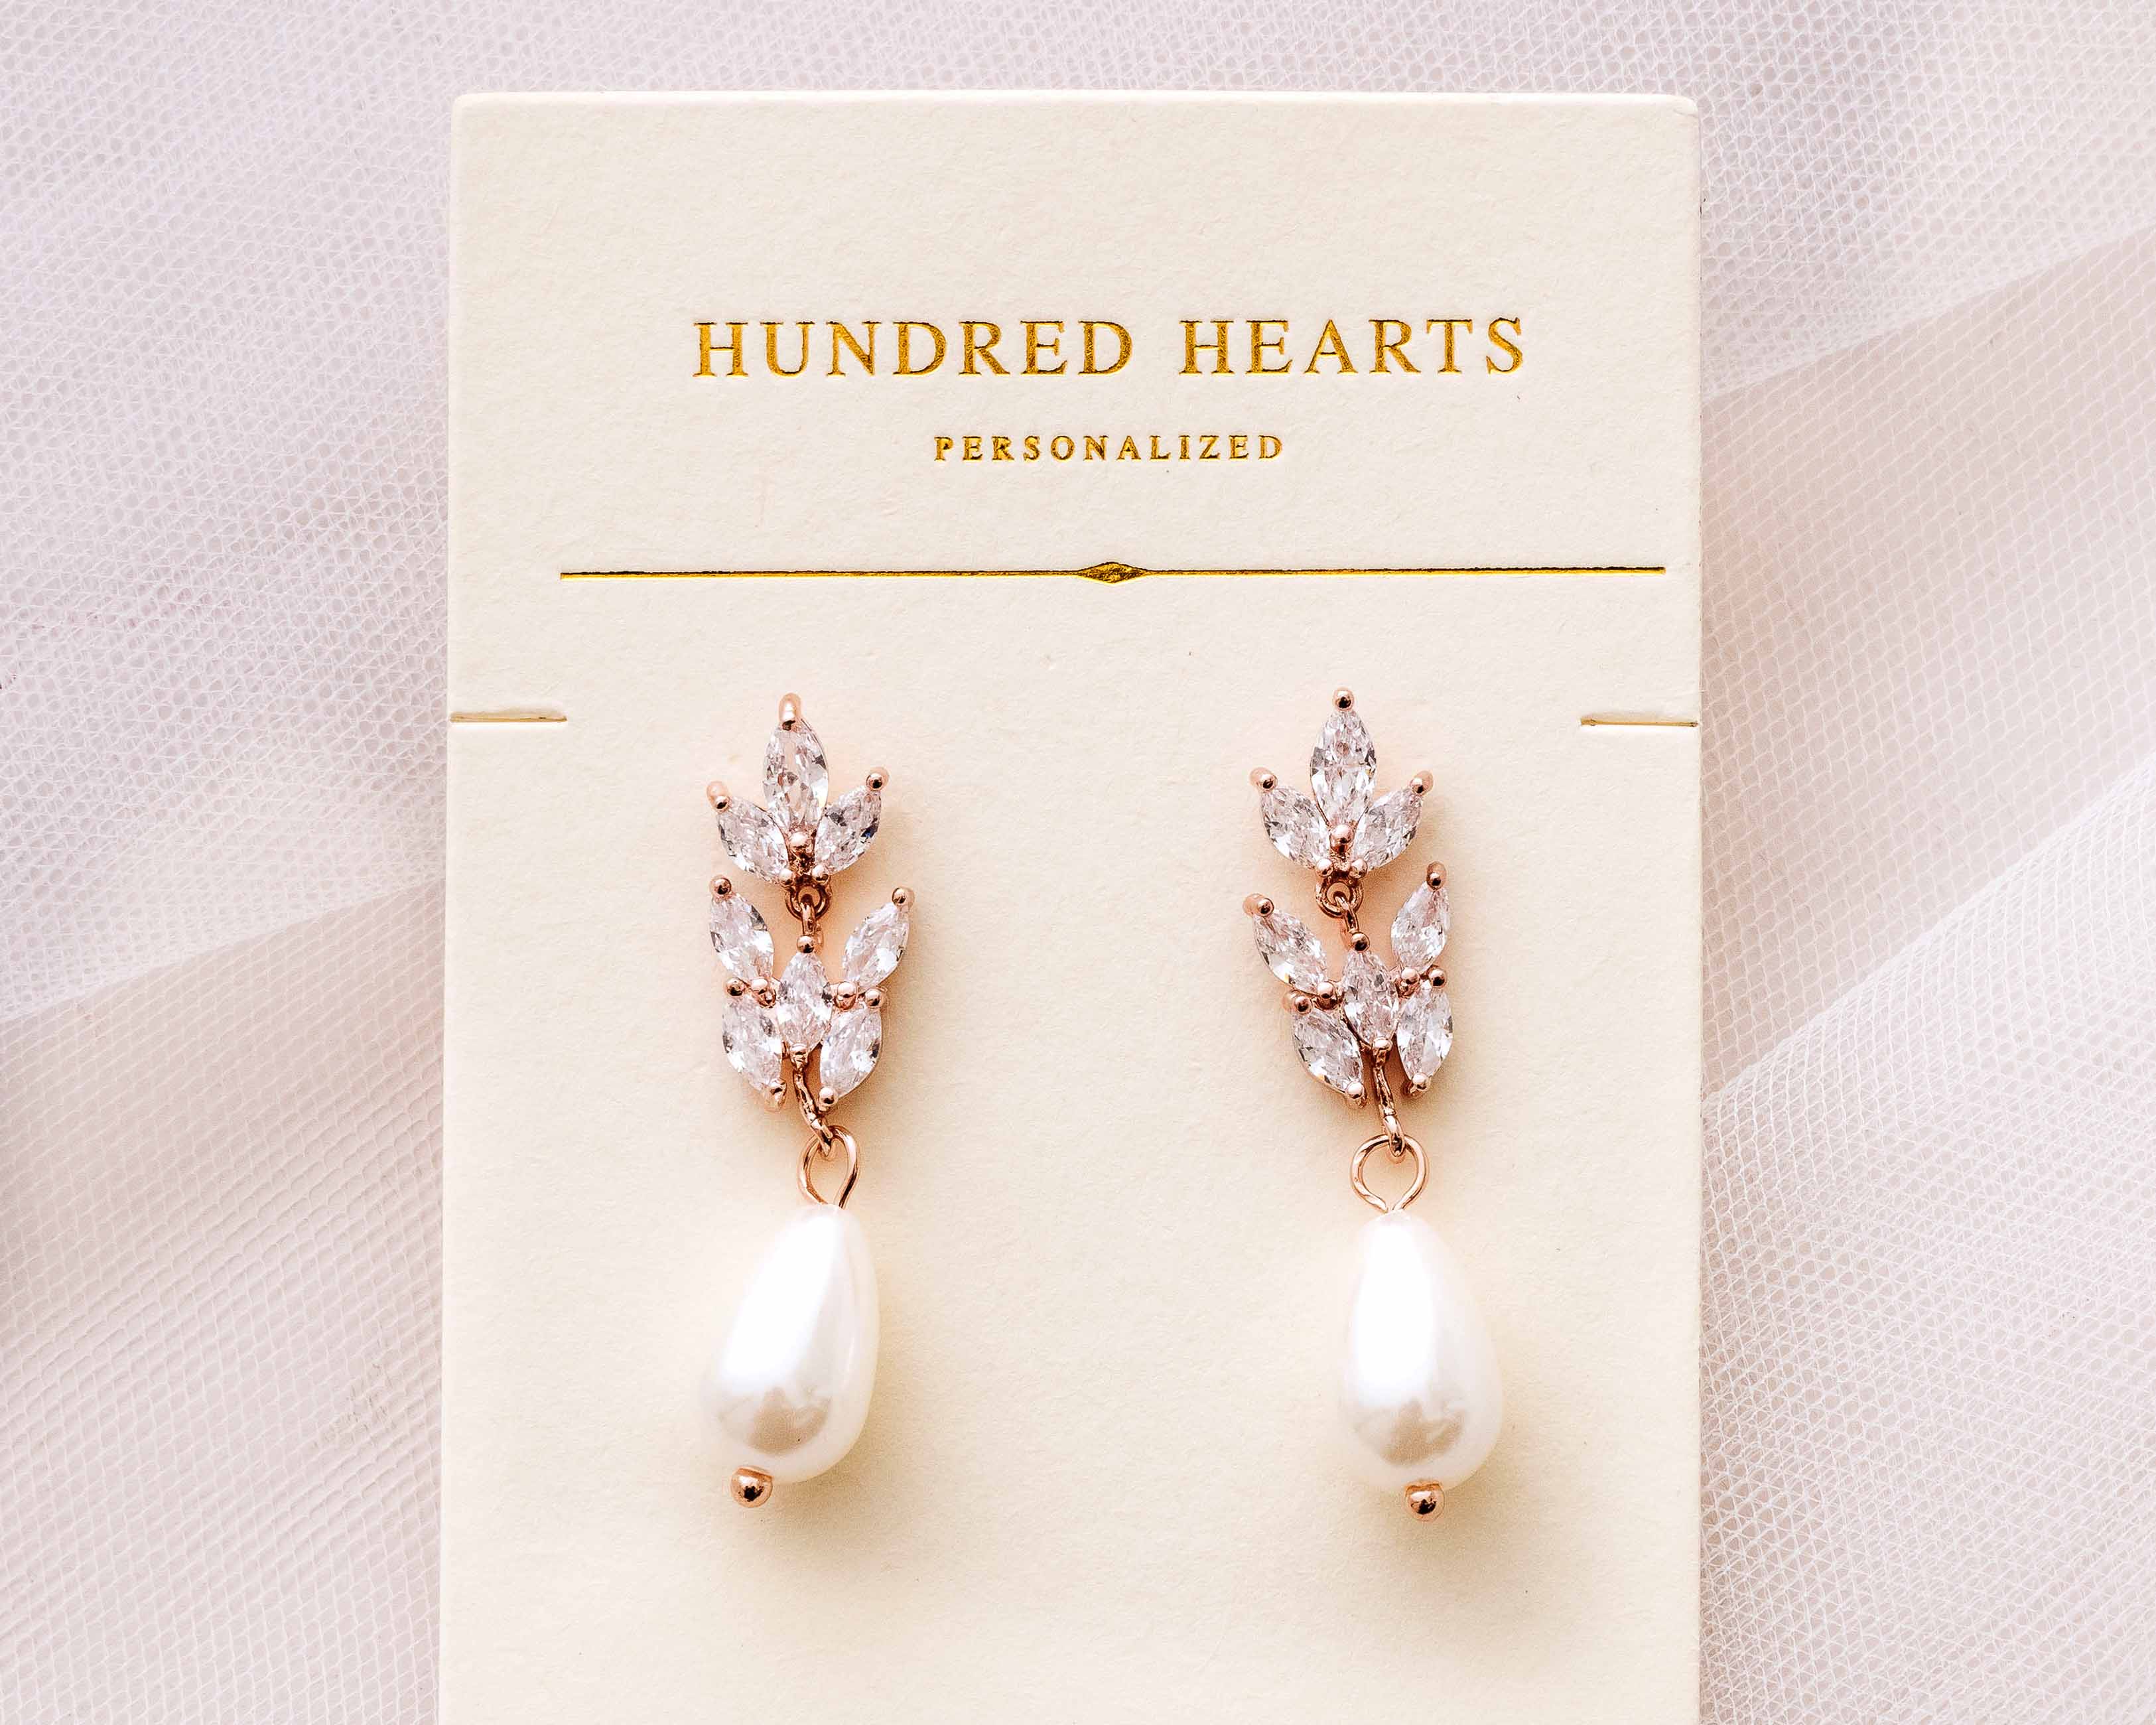 Pearl Bridal Dangle Earrings - Rosegold Pearl Earrings - The perfect bridal and bridesmaid earrings.